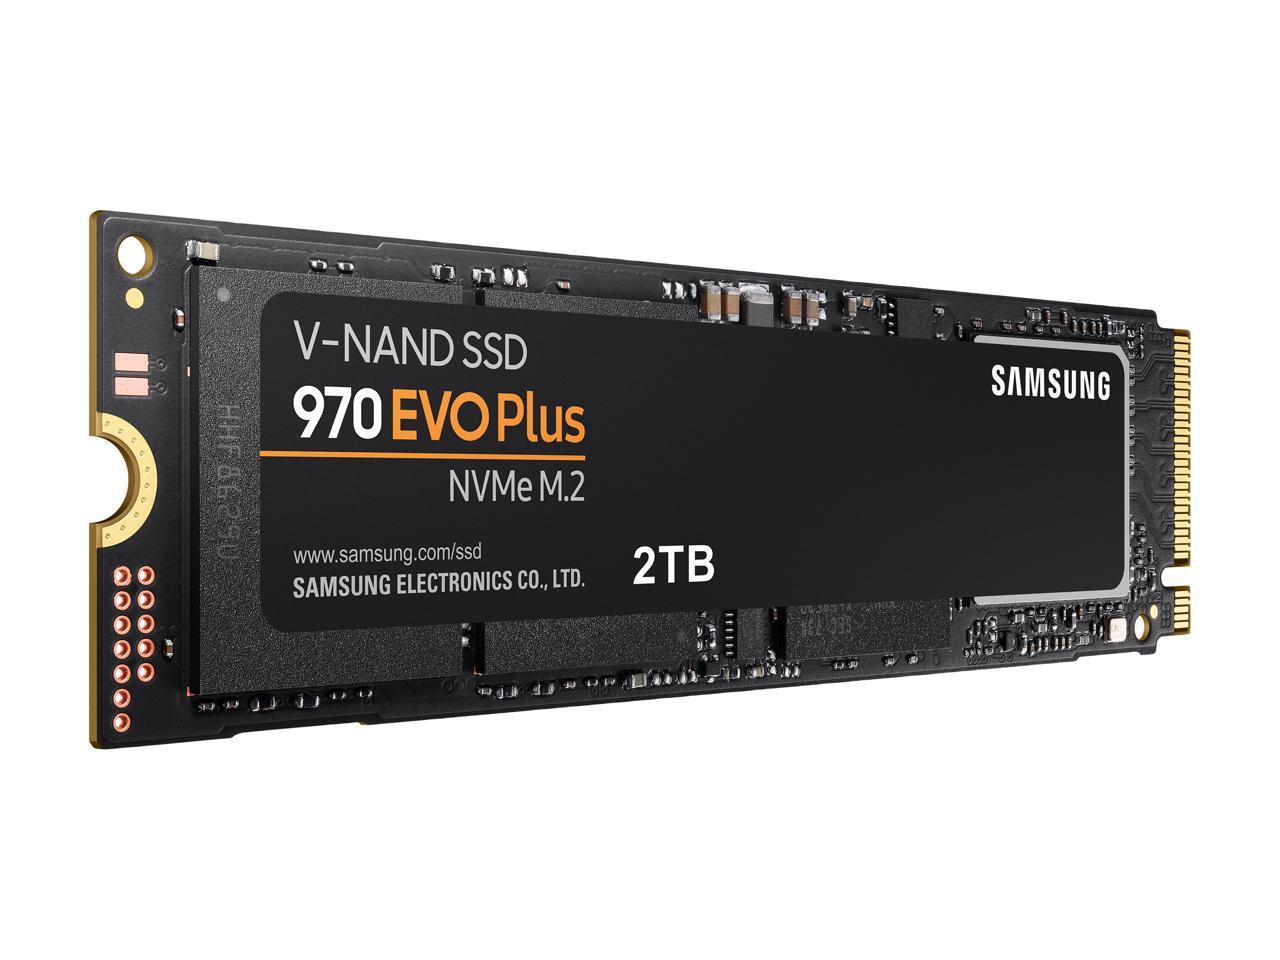 2TB SAMSUNG 970 EVO PLUS NVMe SSD @Newegg $198